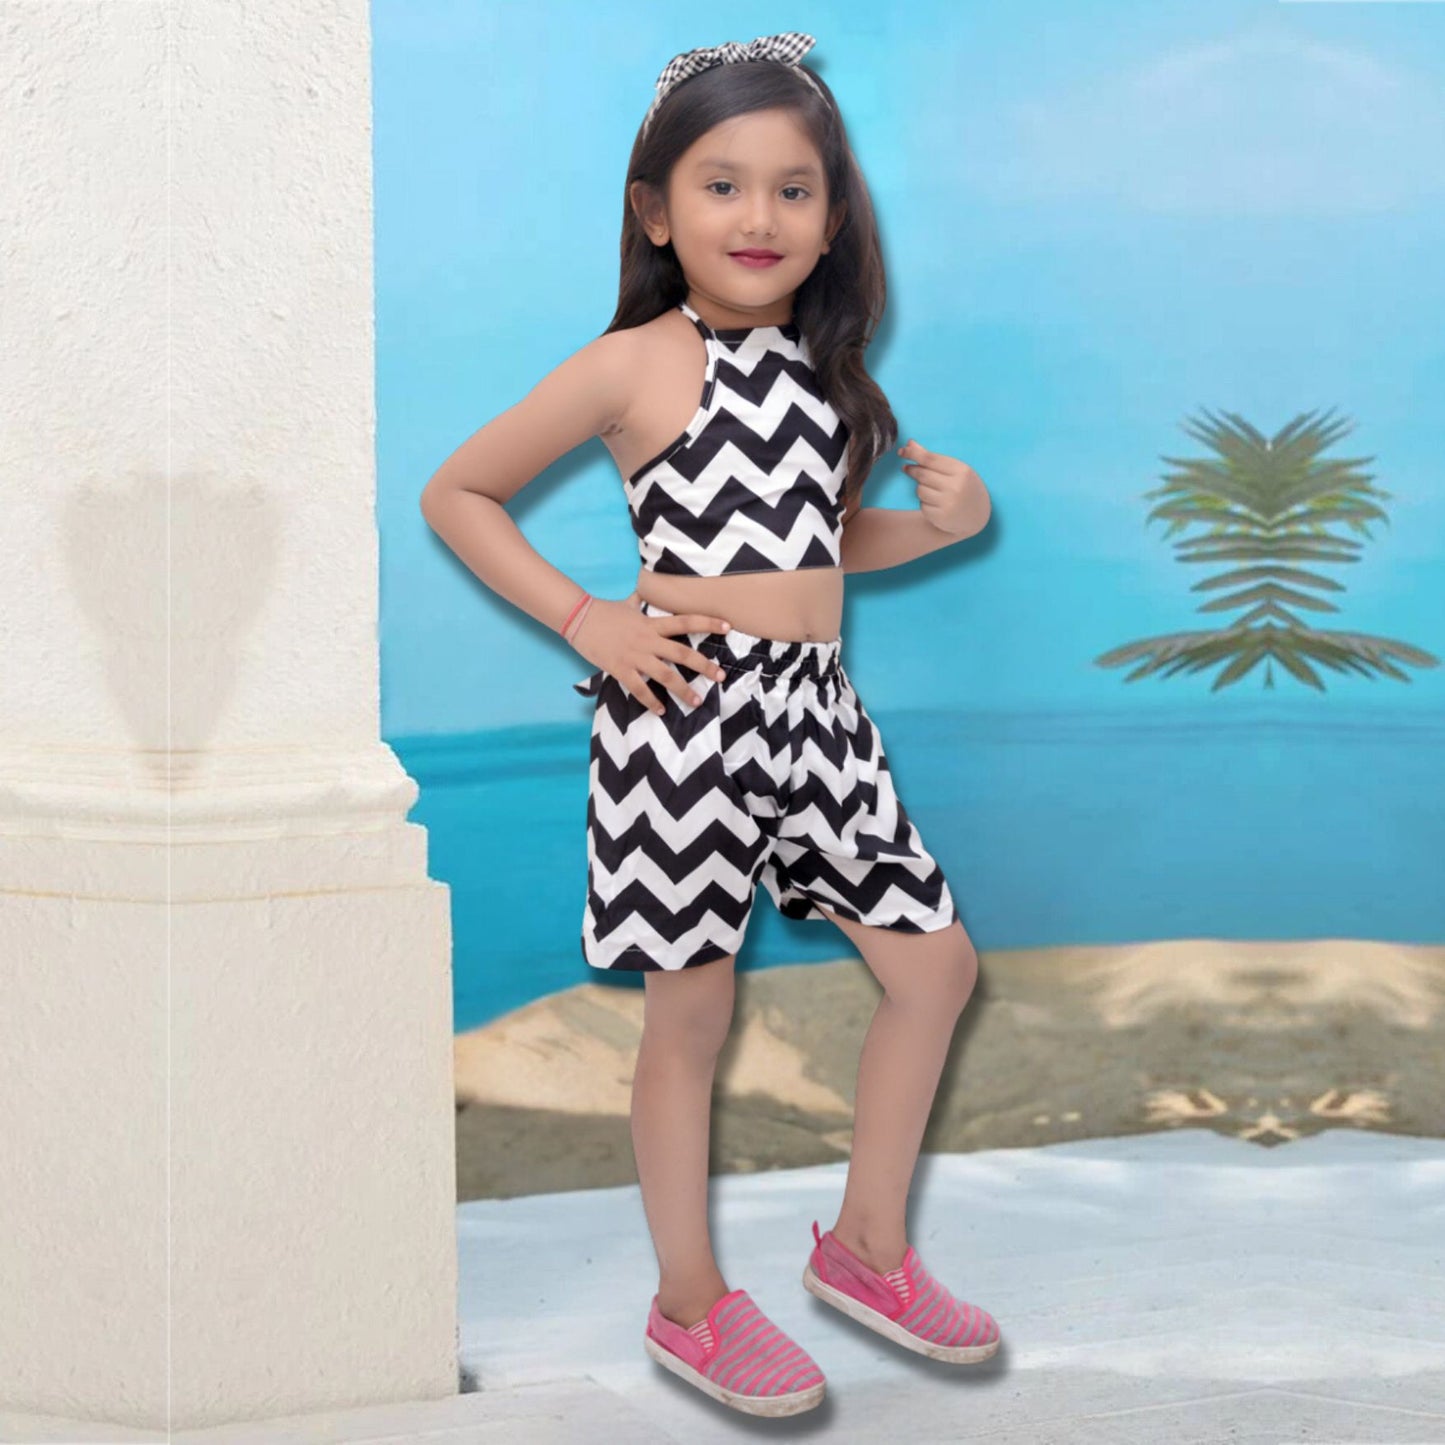 Stylish Designer Black & White Top & Shorts For Baby Girl.